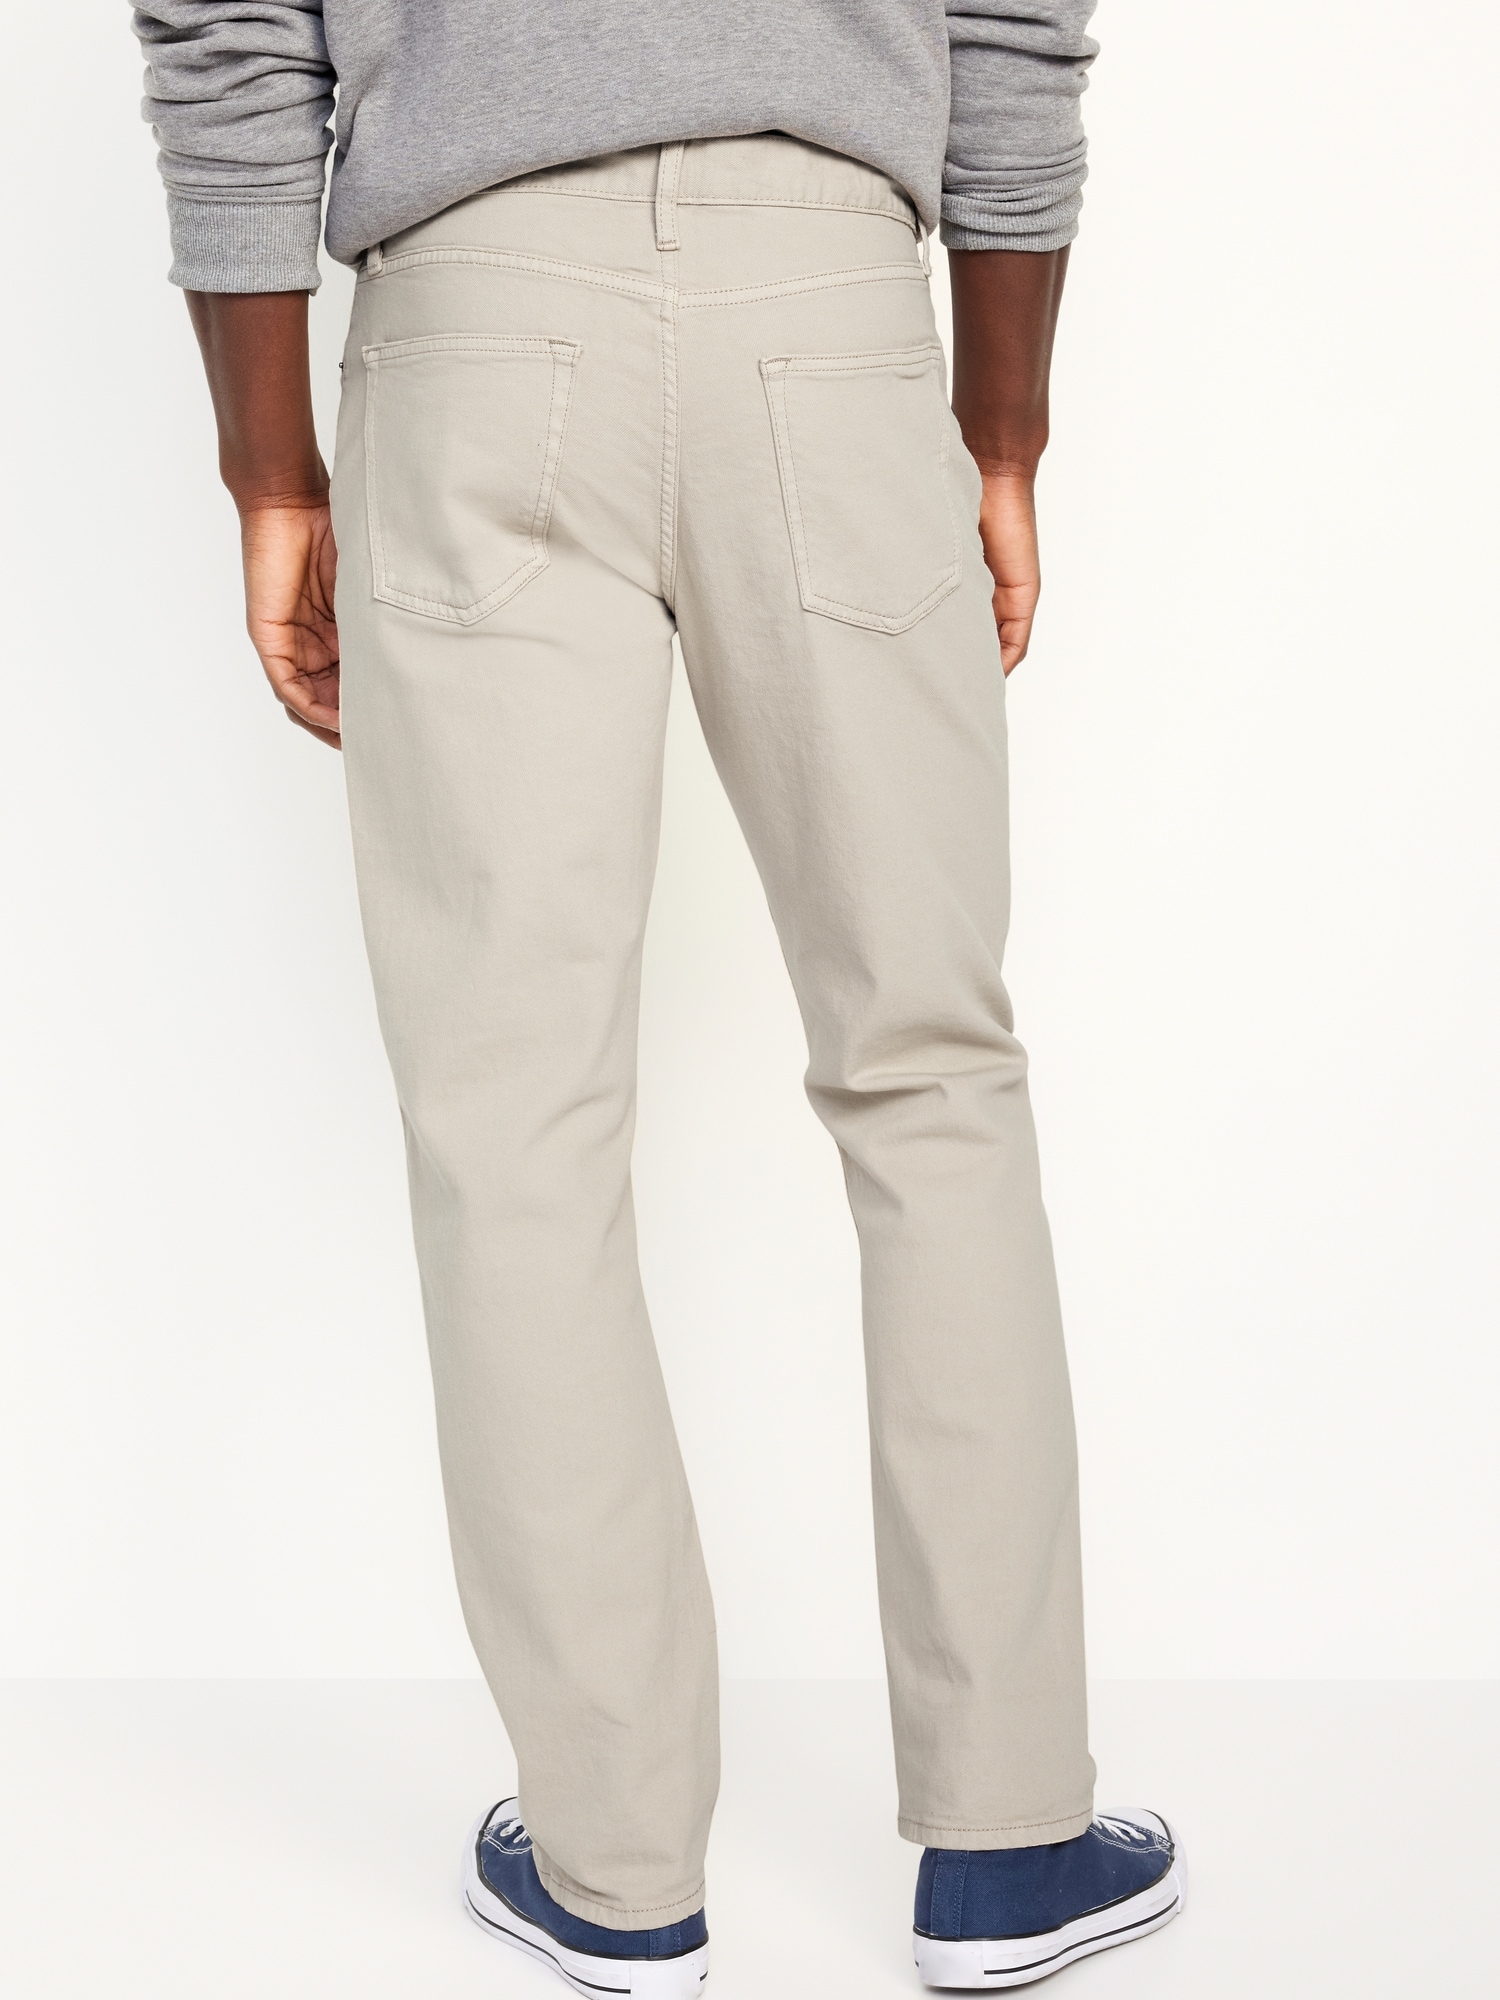 Straight Five-Pocket Pants for Old Navy Men 